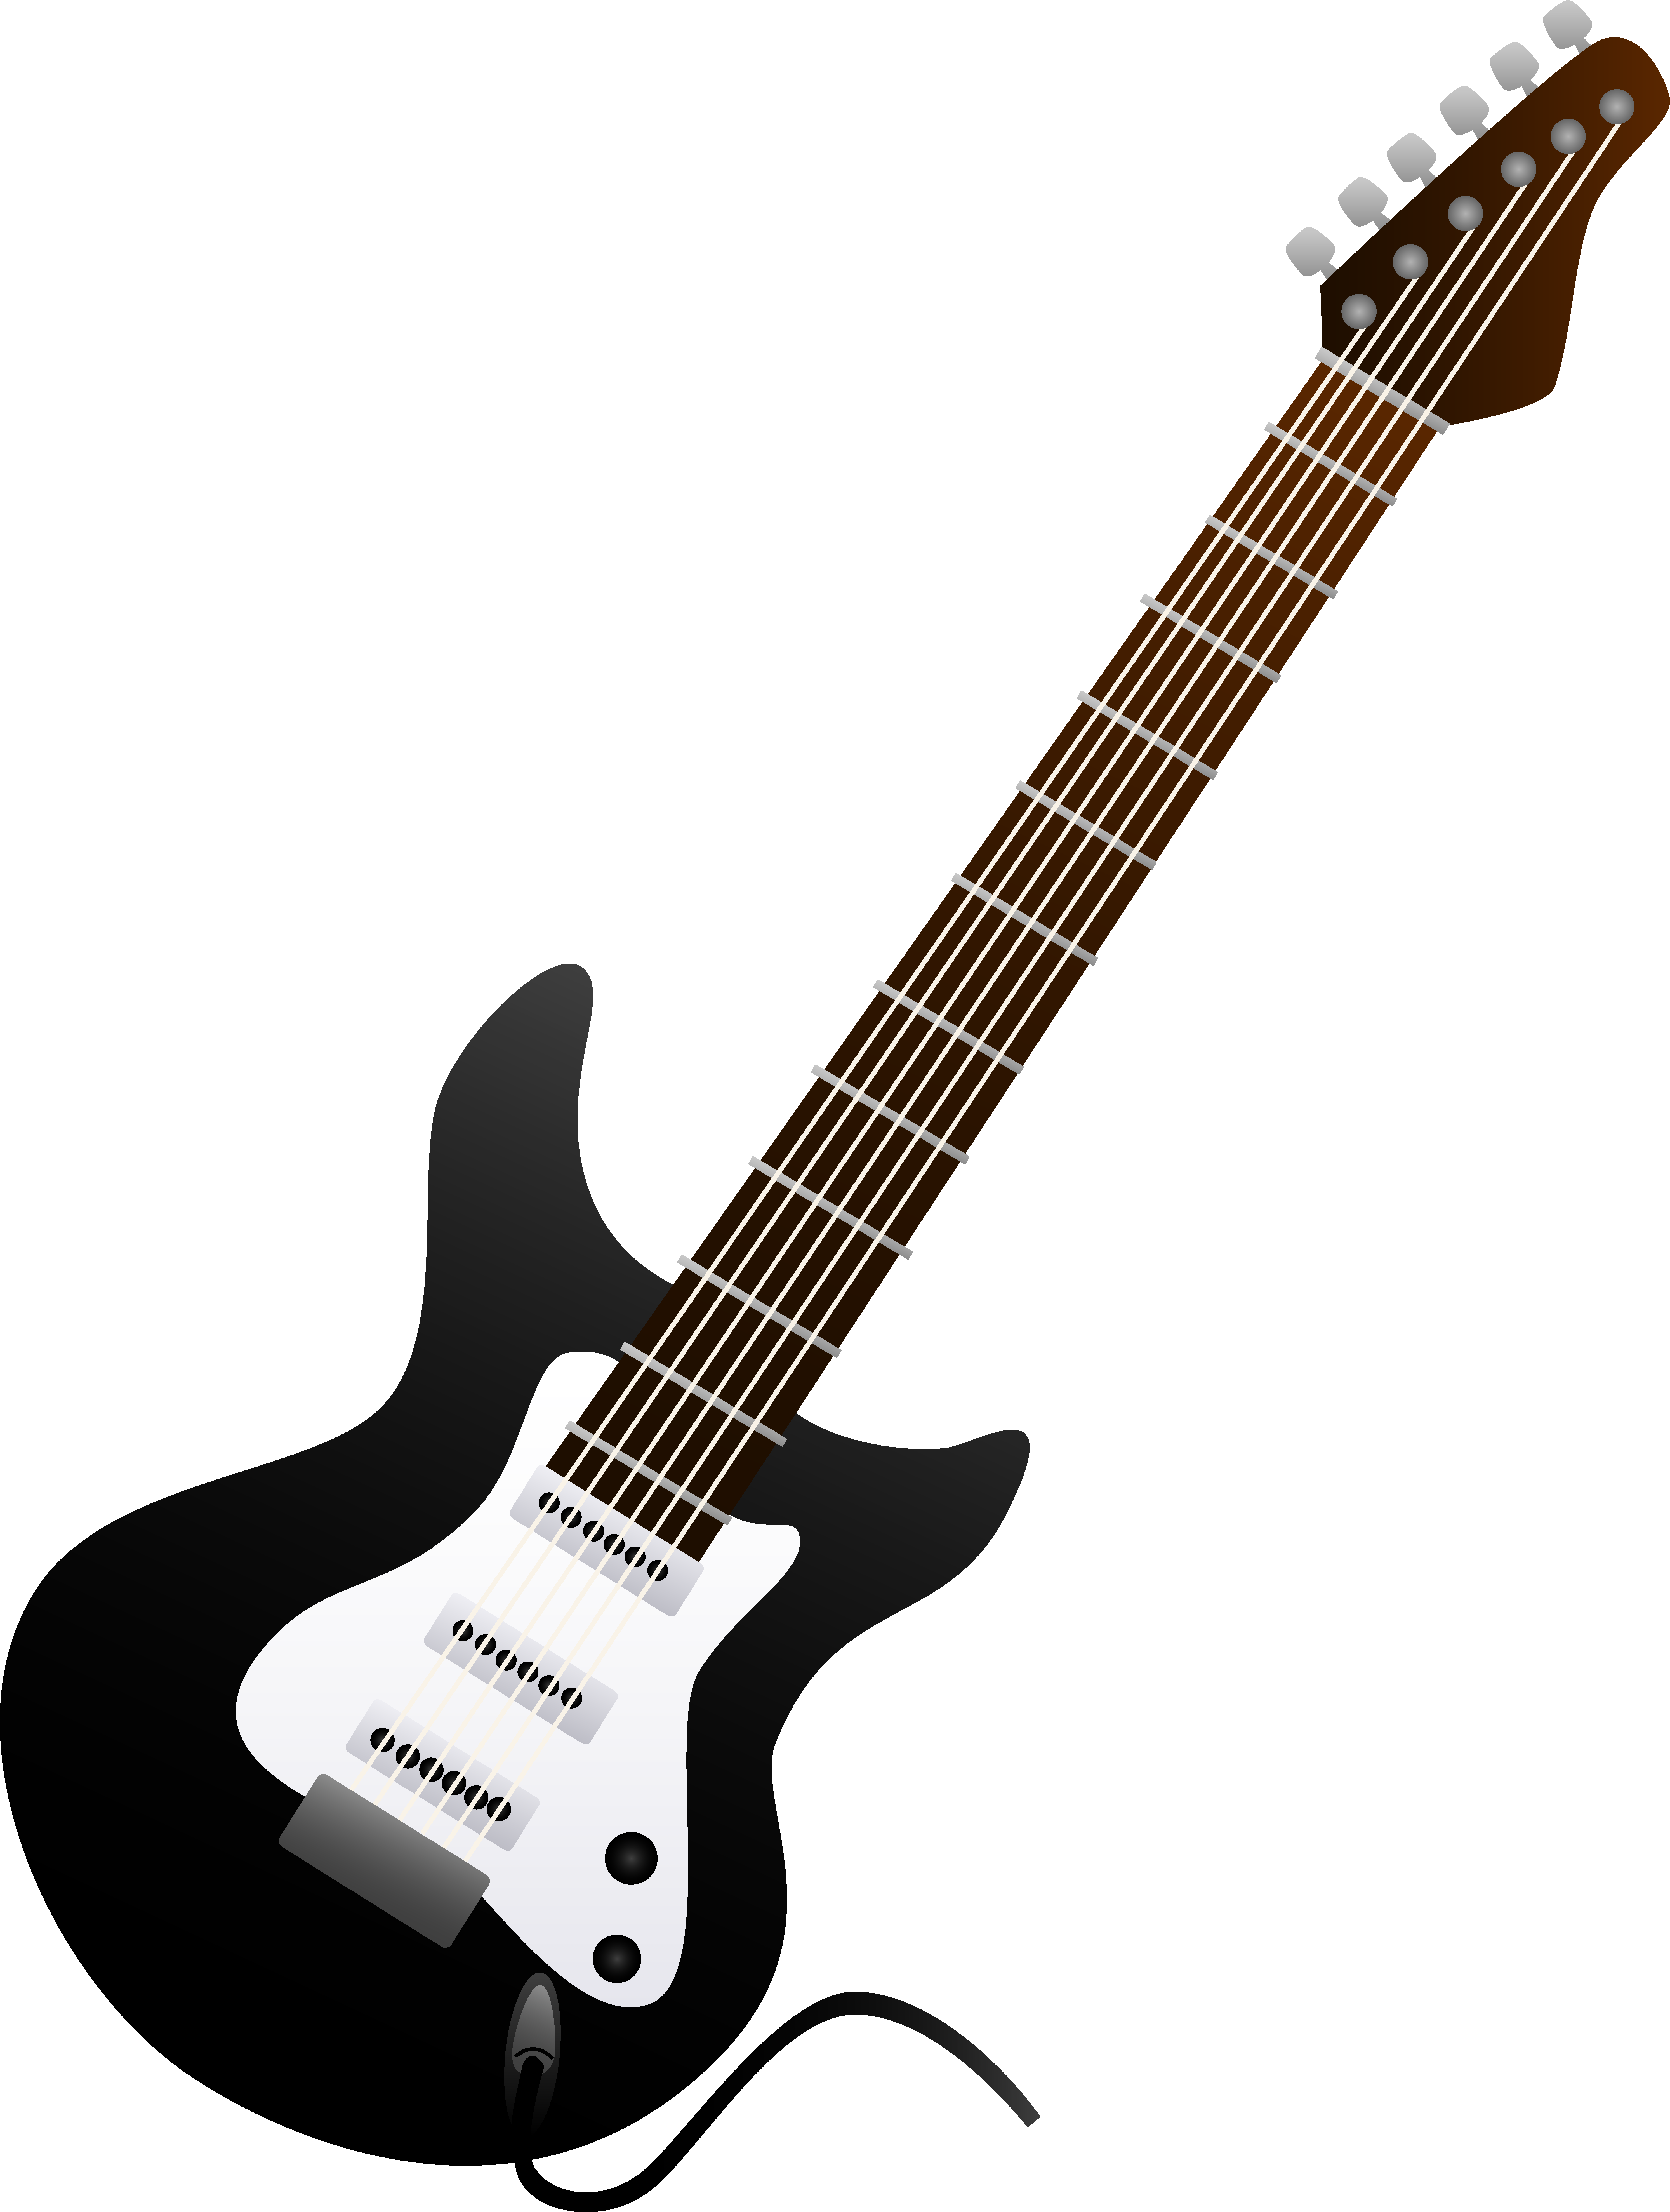 Black Electric Guitar Design - Free Clip Art